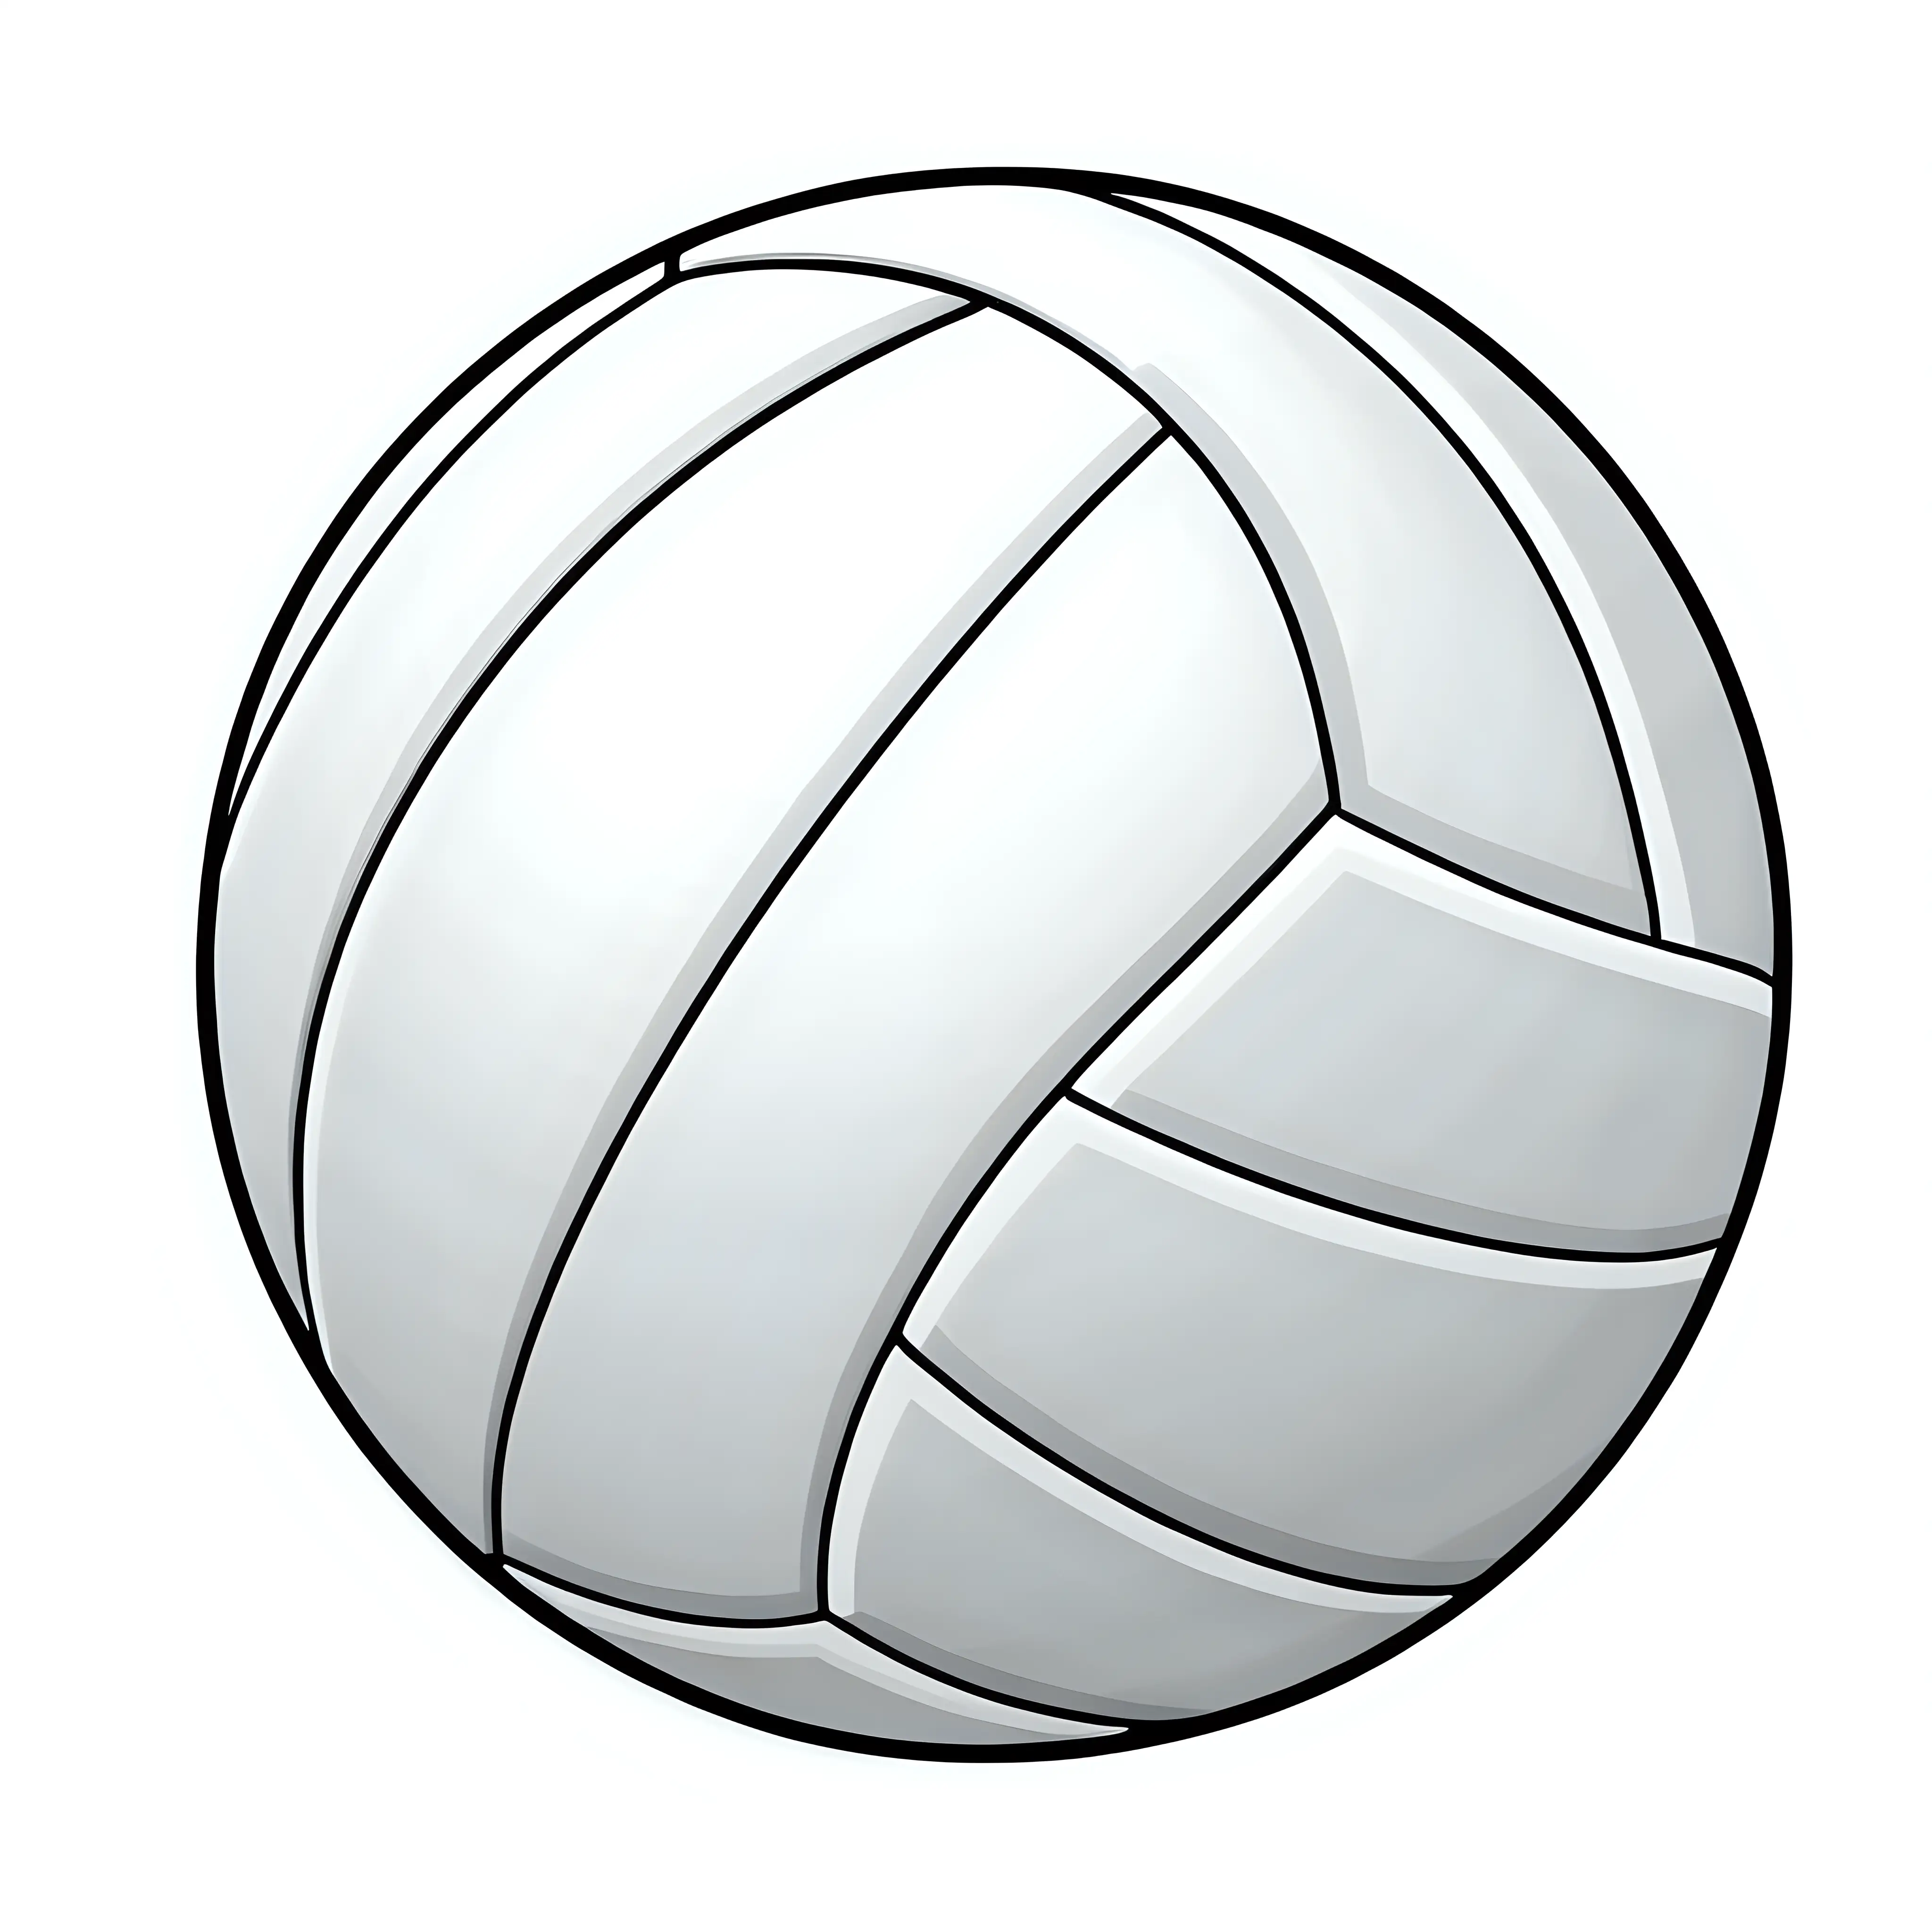 Minimalist White Volleyball Ball Cartoon Sticker Simple Vector Graphic Design